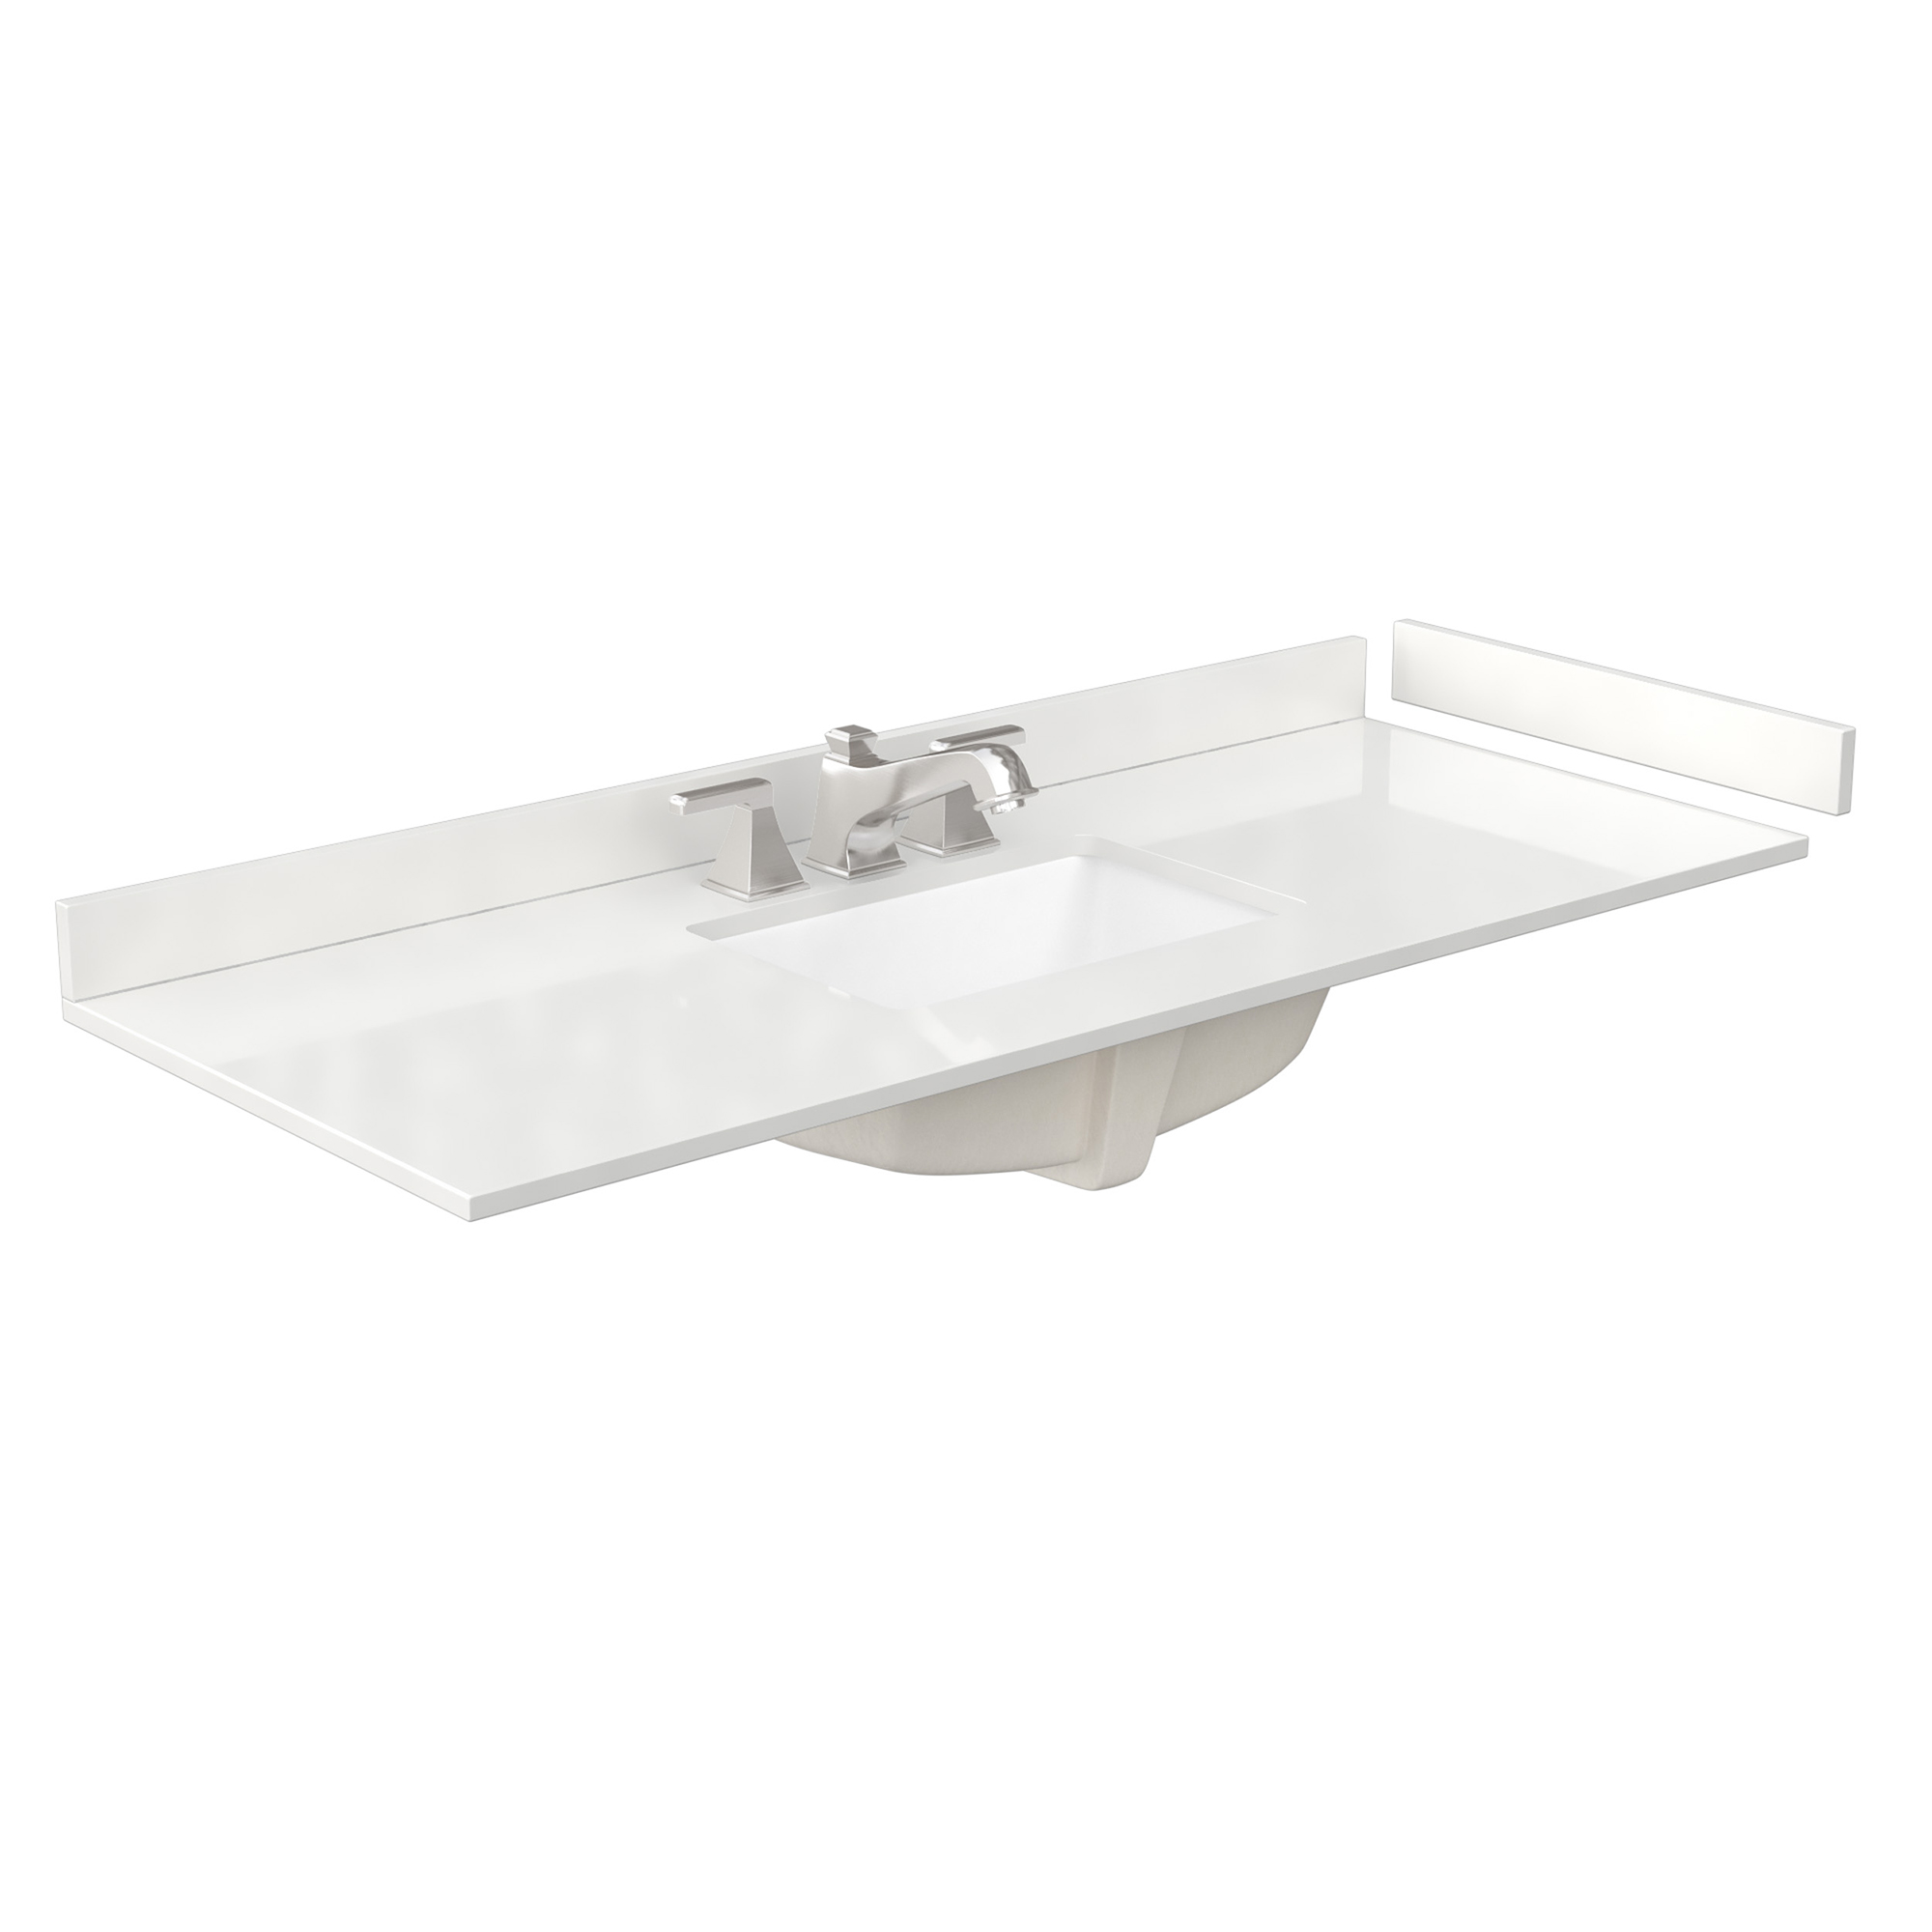 54" Single Countertop - White Quartz (1000) with Undermount Square Sink (3-Hole) - Includes Backsplash and Sidesplash WCFQC354STOPUNSWQ